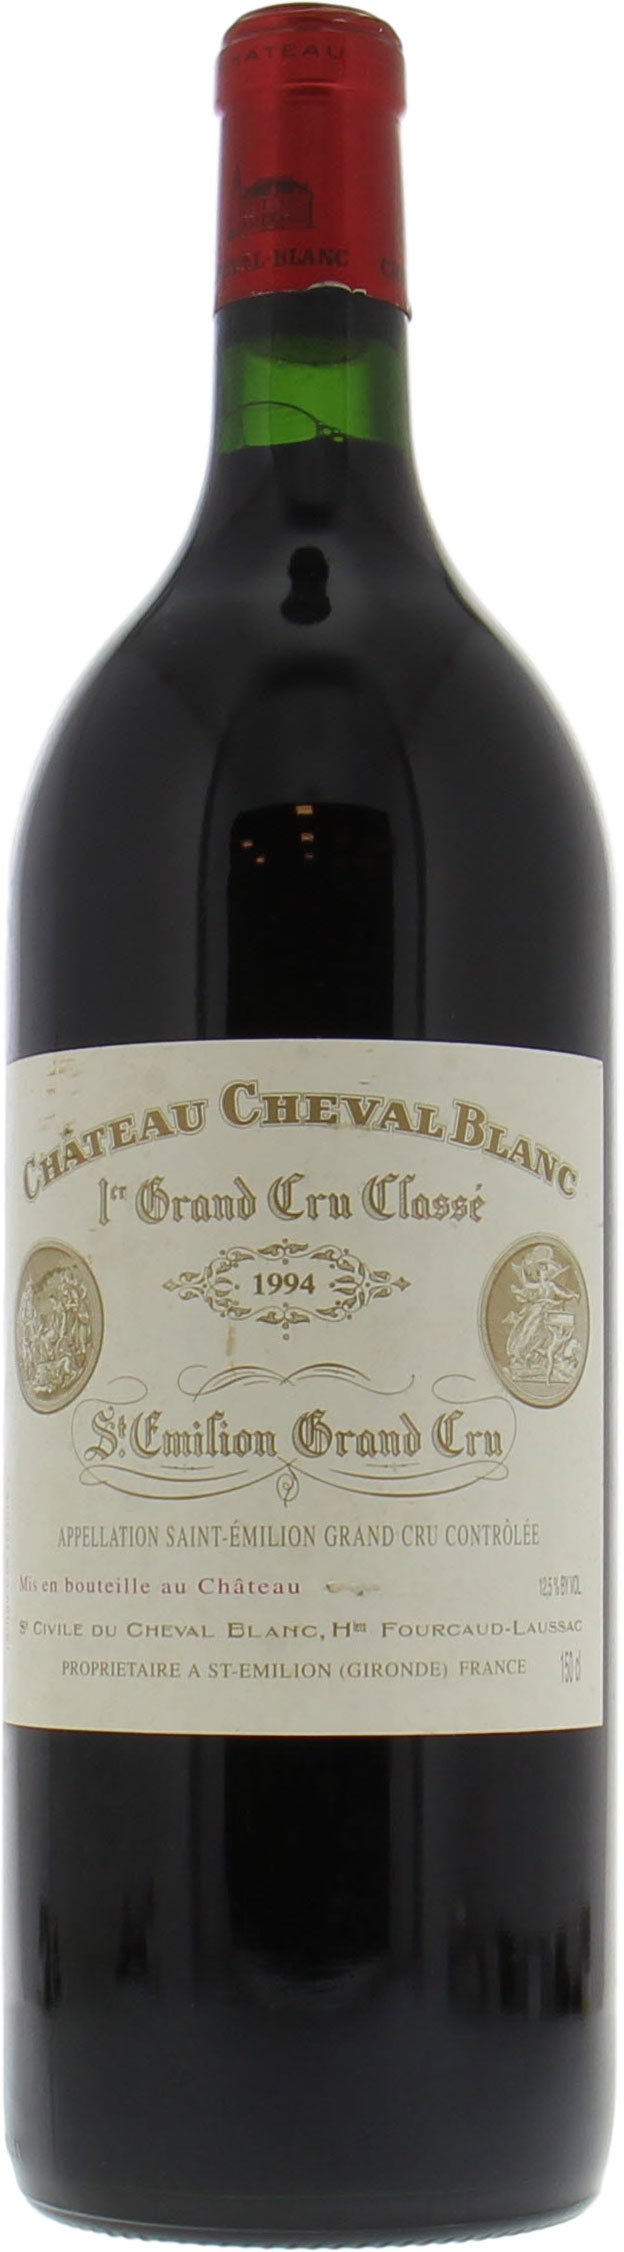 Chateau Cheval Blanc - Chateau Cheval Blanc 1994 Perfect